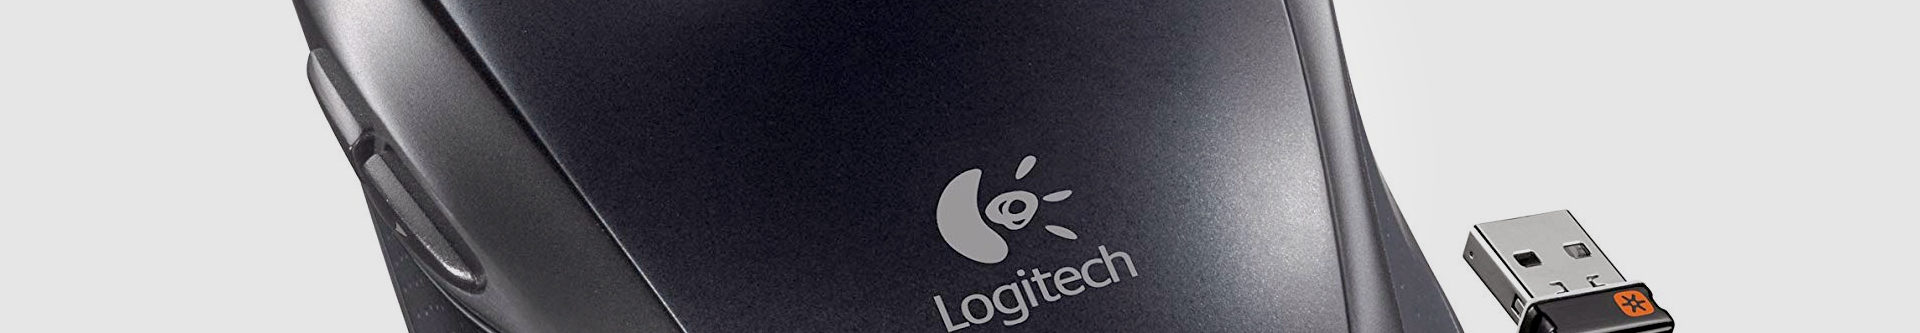 Logitech Anywhere MX wireless mouse